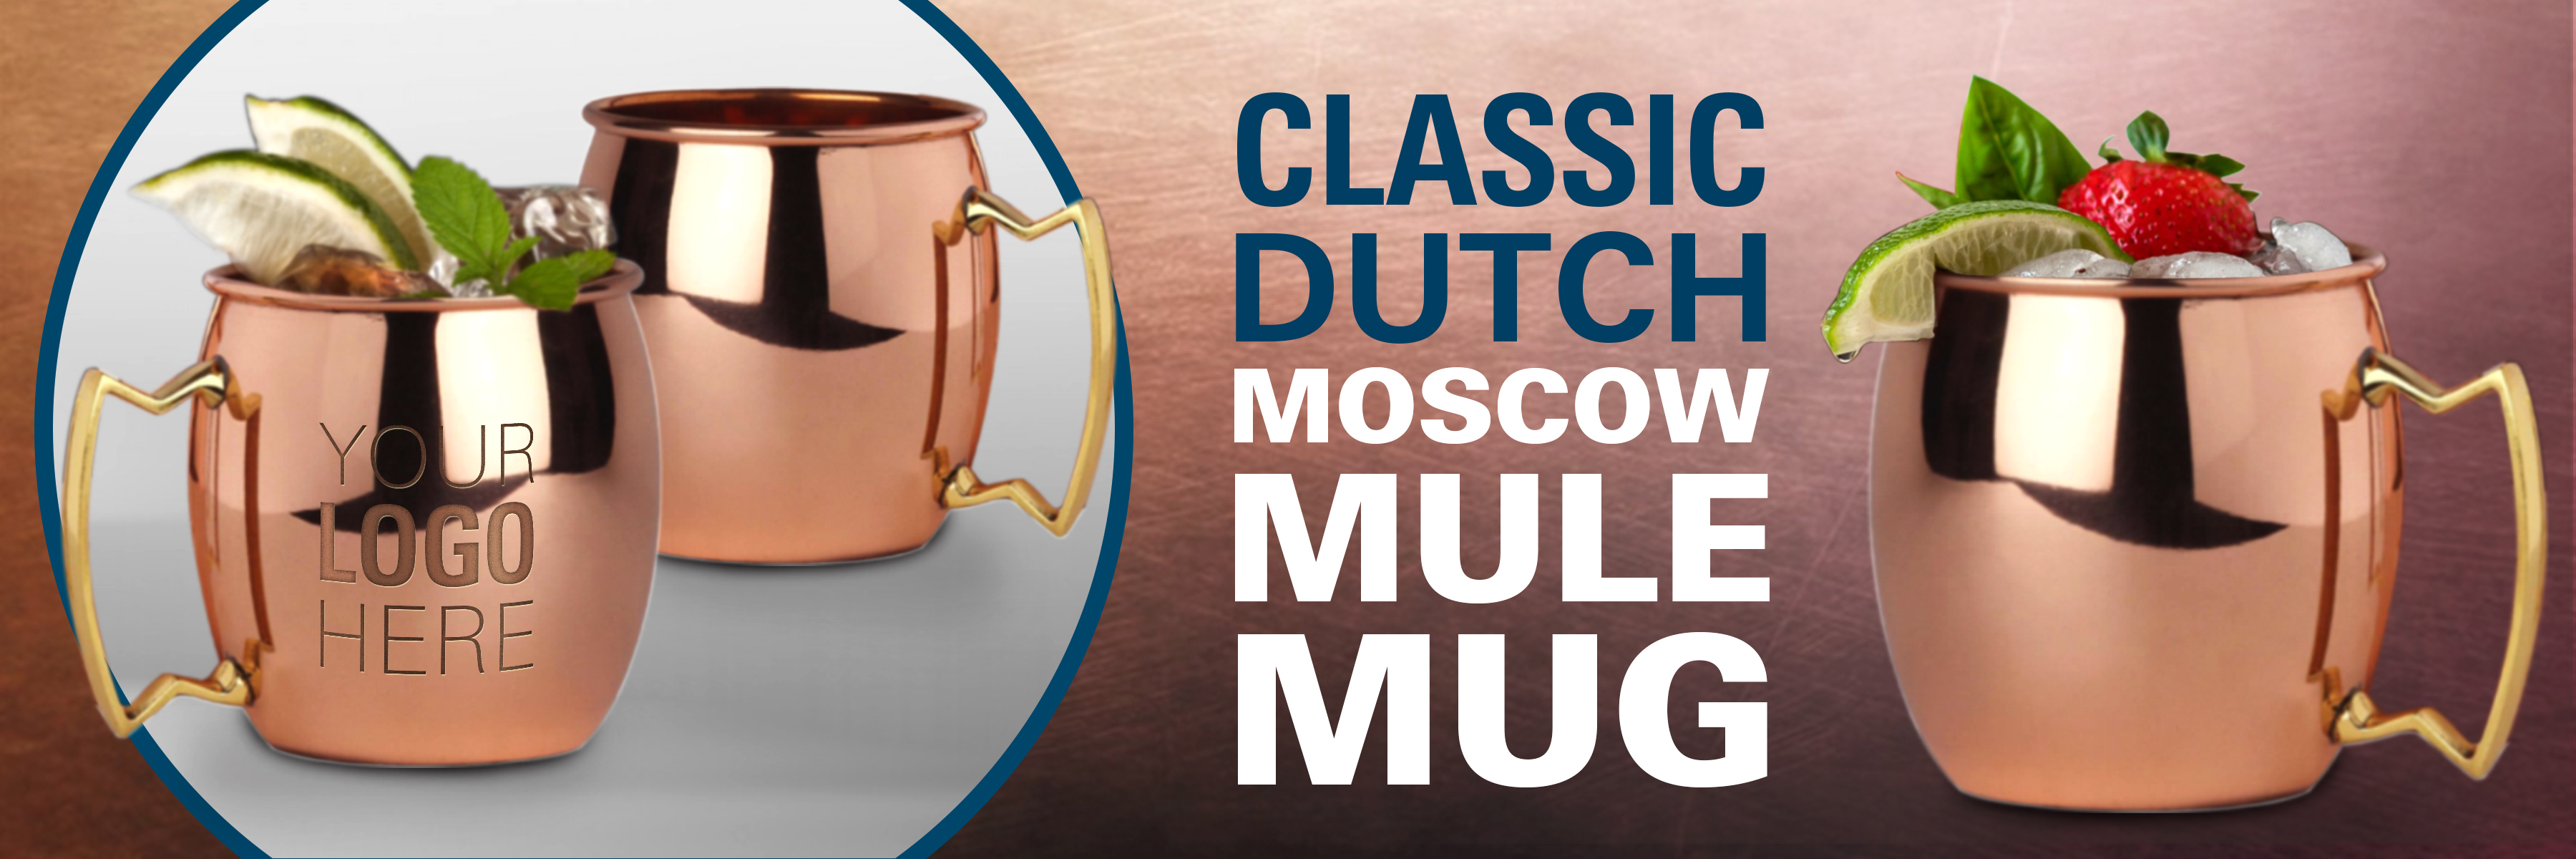 classic dutch moscow mule mug